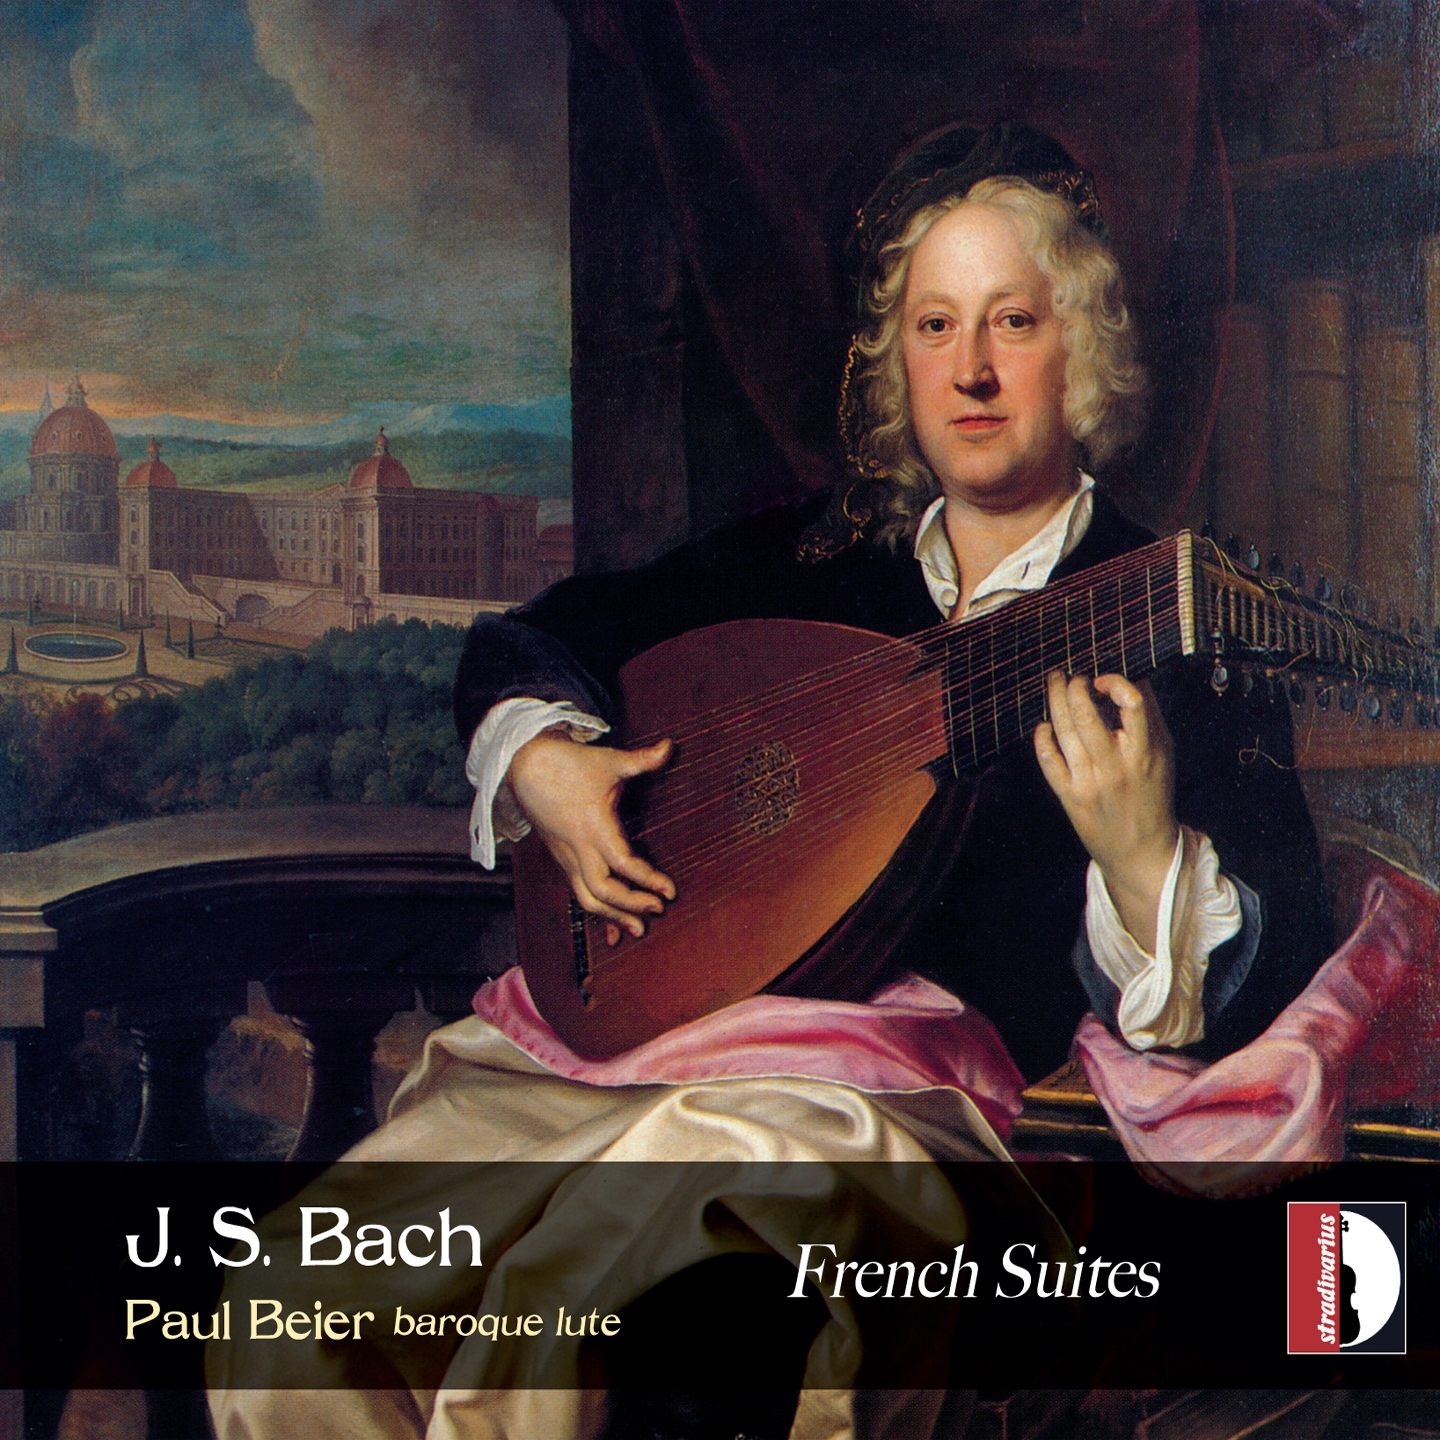 6 French Suites, No. 4 in D Major, BWV 815: IV. Sarabande (Transcription for Lute)